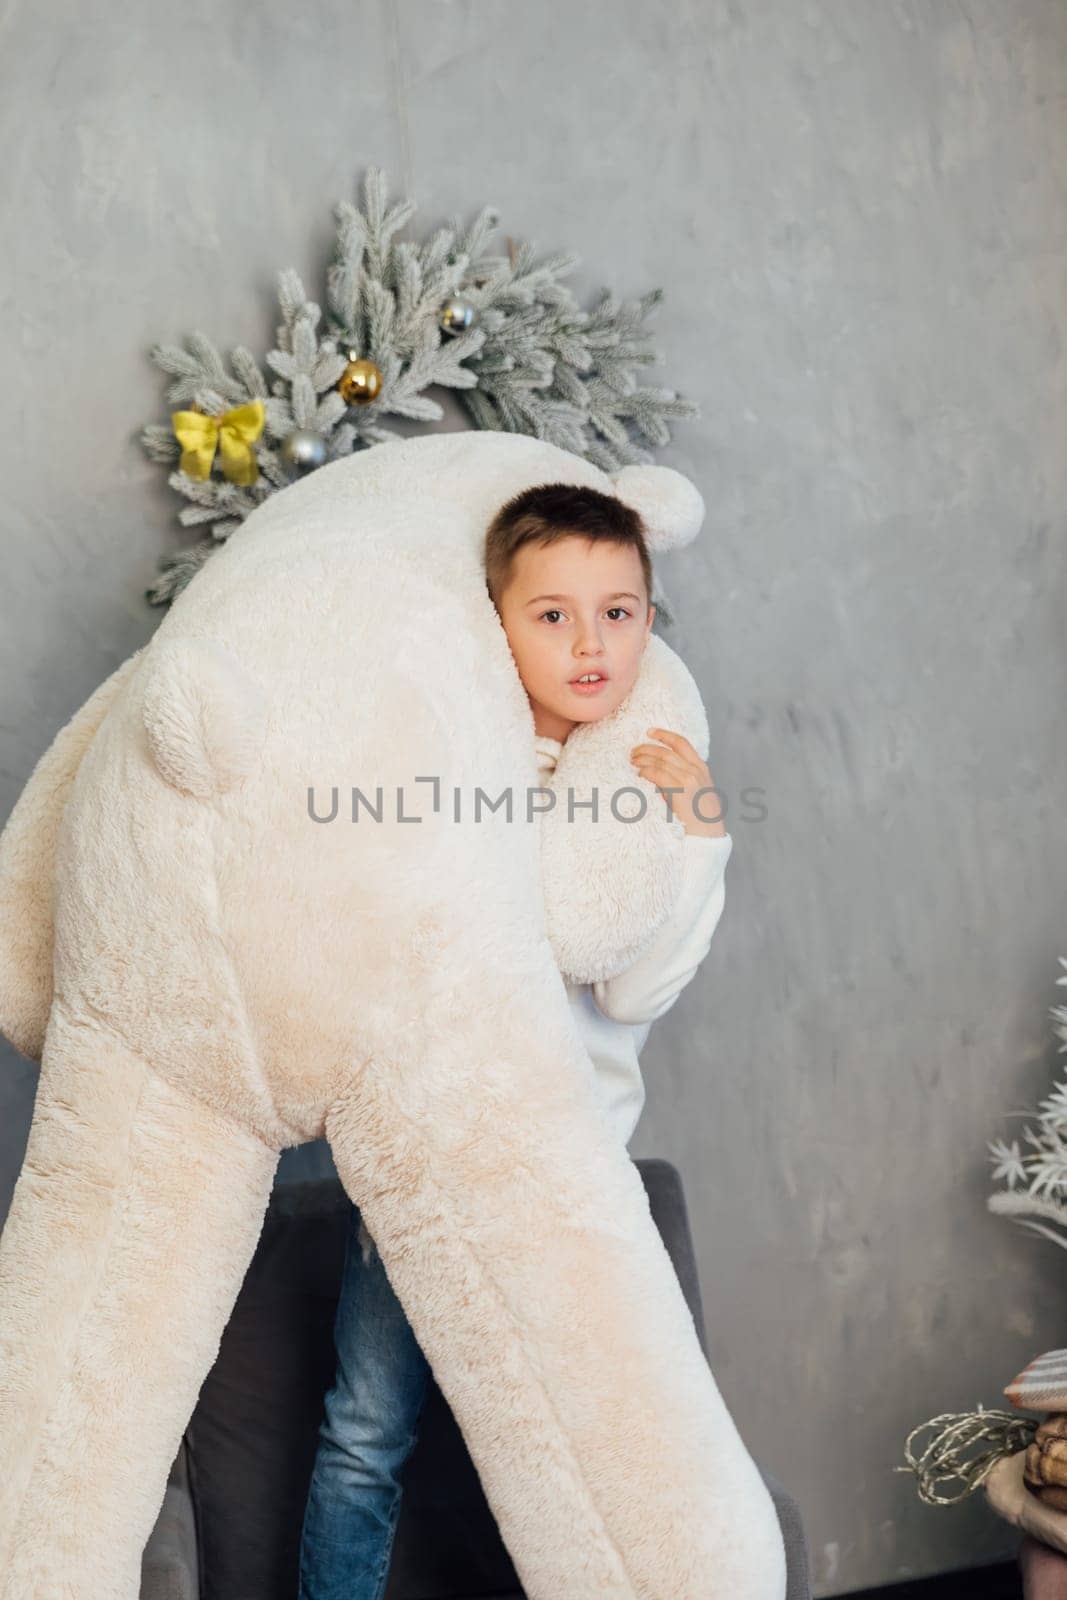 Boy holding a big teddy bear at the Christmas tree